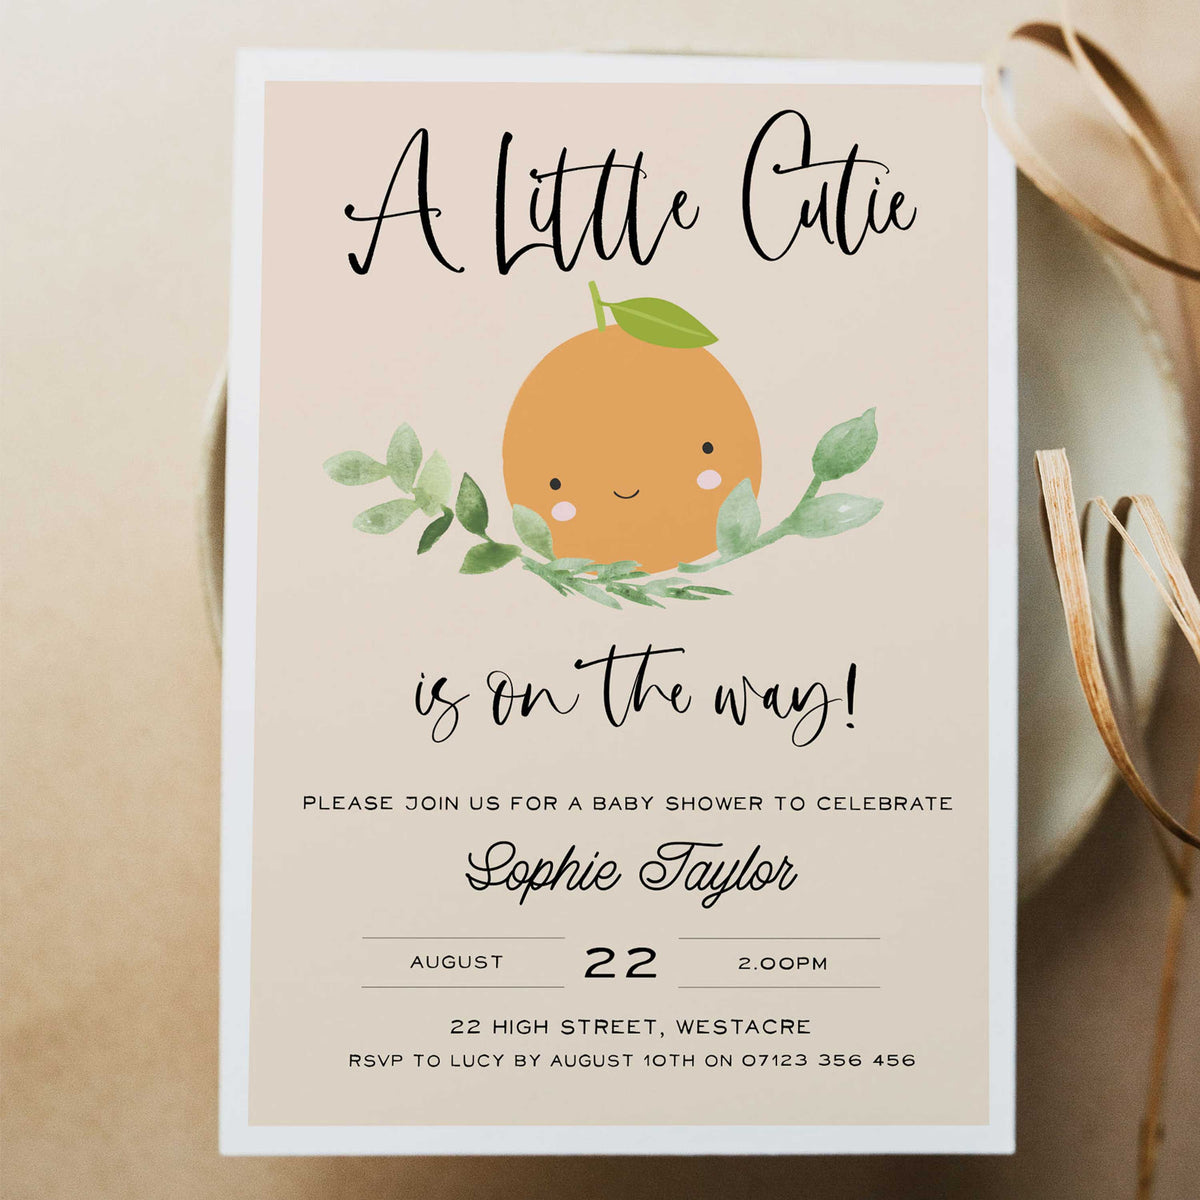 editable baby shower invitations, printable little cutie baby shower invitations, editable baby invites, little cutie baby shower theme, baby invitations